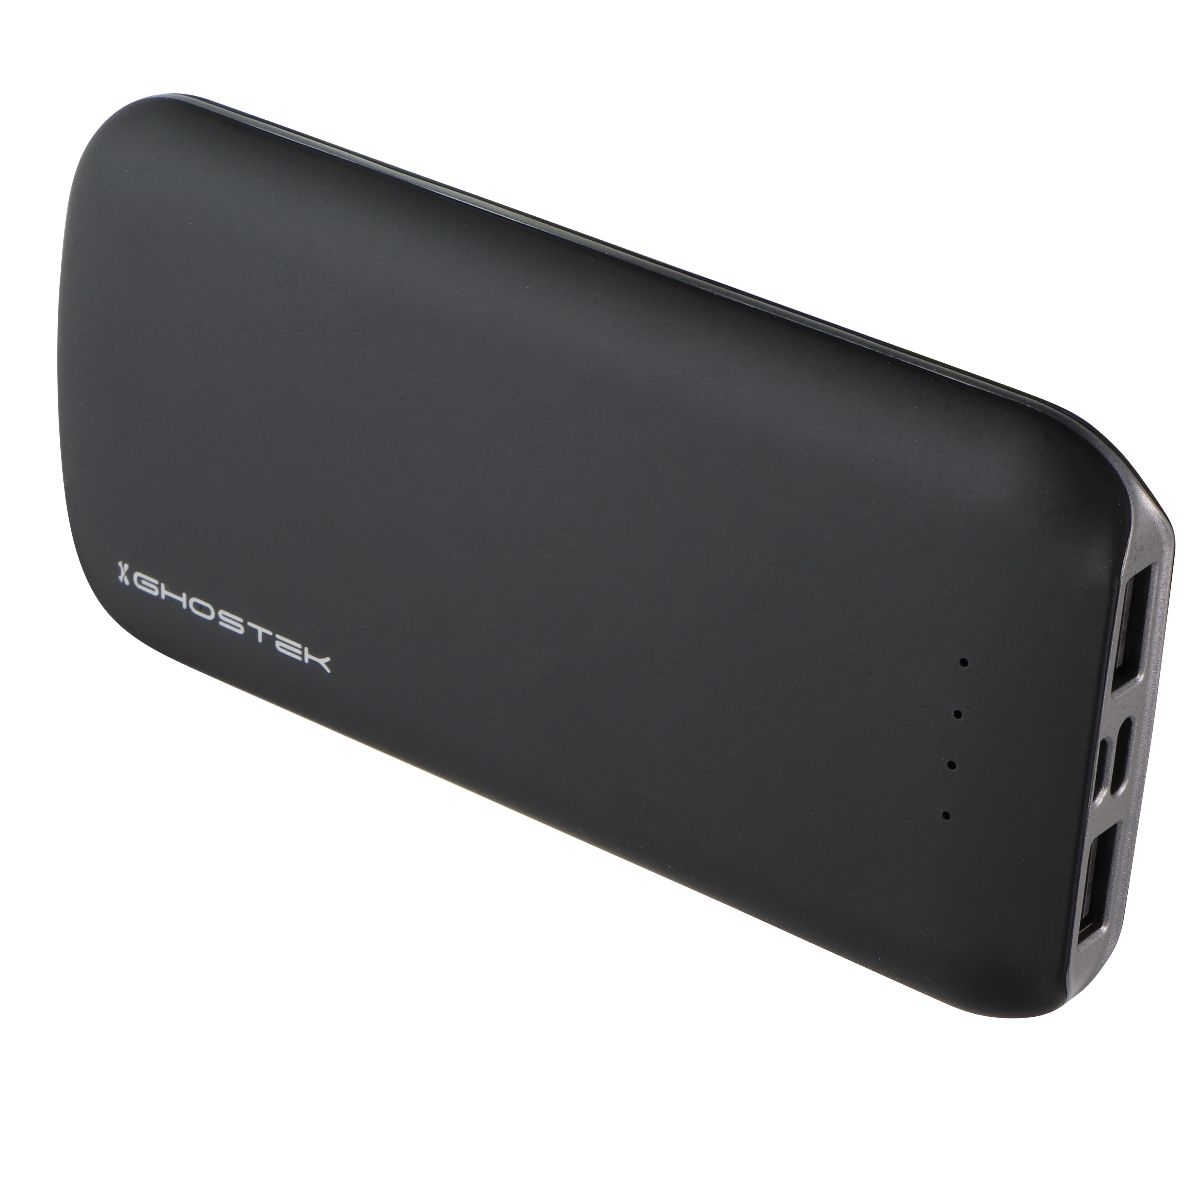 Ghostek Life NRGpak+ (10,000mAh) Portable Dual USB Power Bank - Black